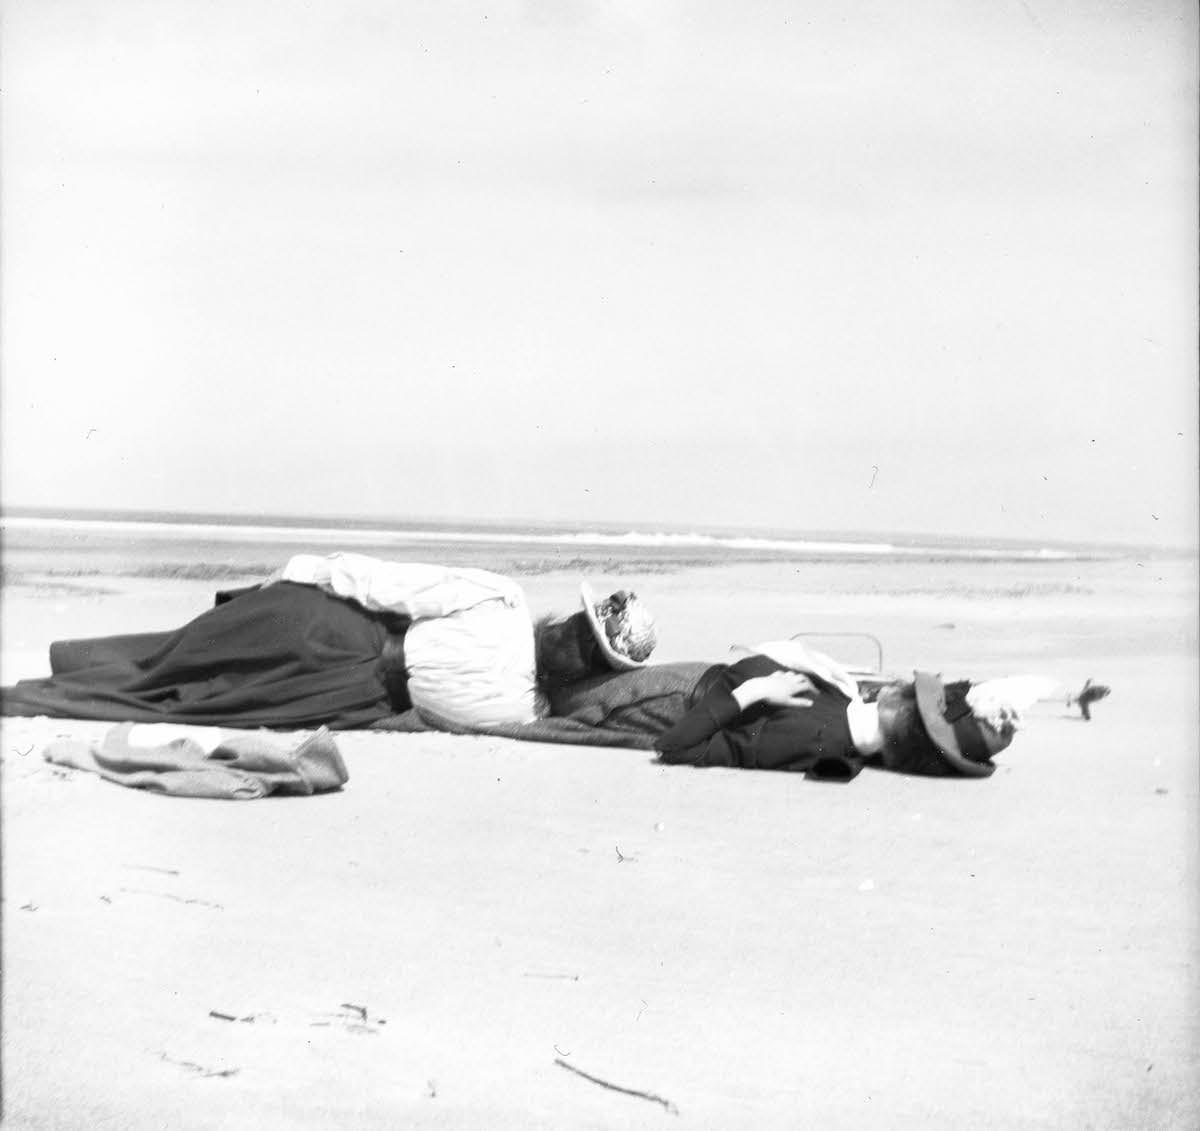 Grace and Mary at Ipswich Beach, May 30, 1900.